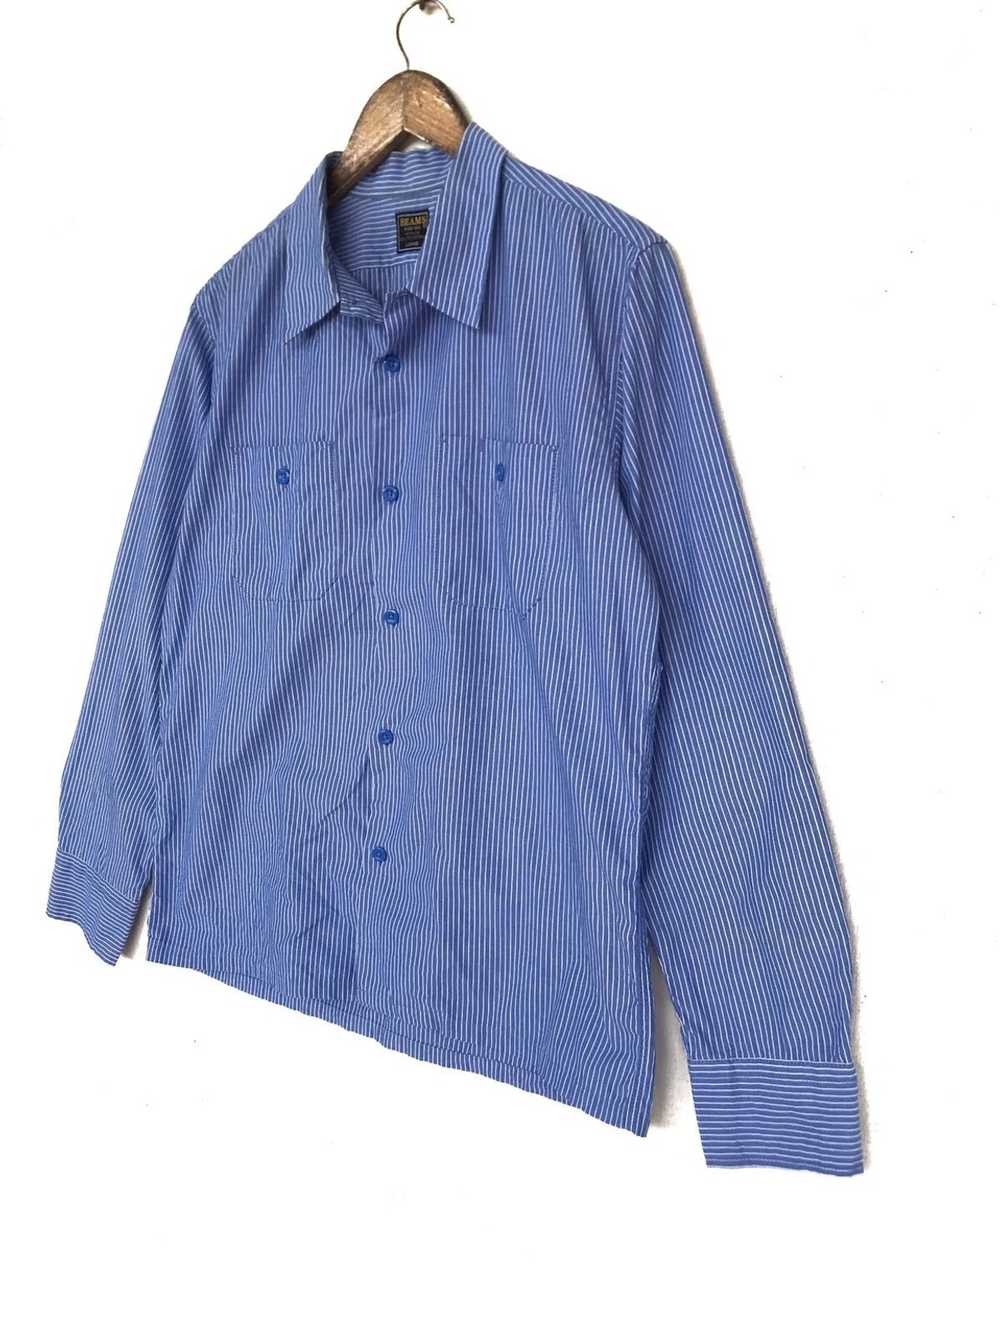 Beams Plus × Vintage Button ups Stripes shirts wi… - image 3